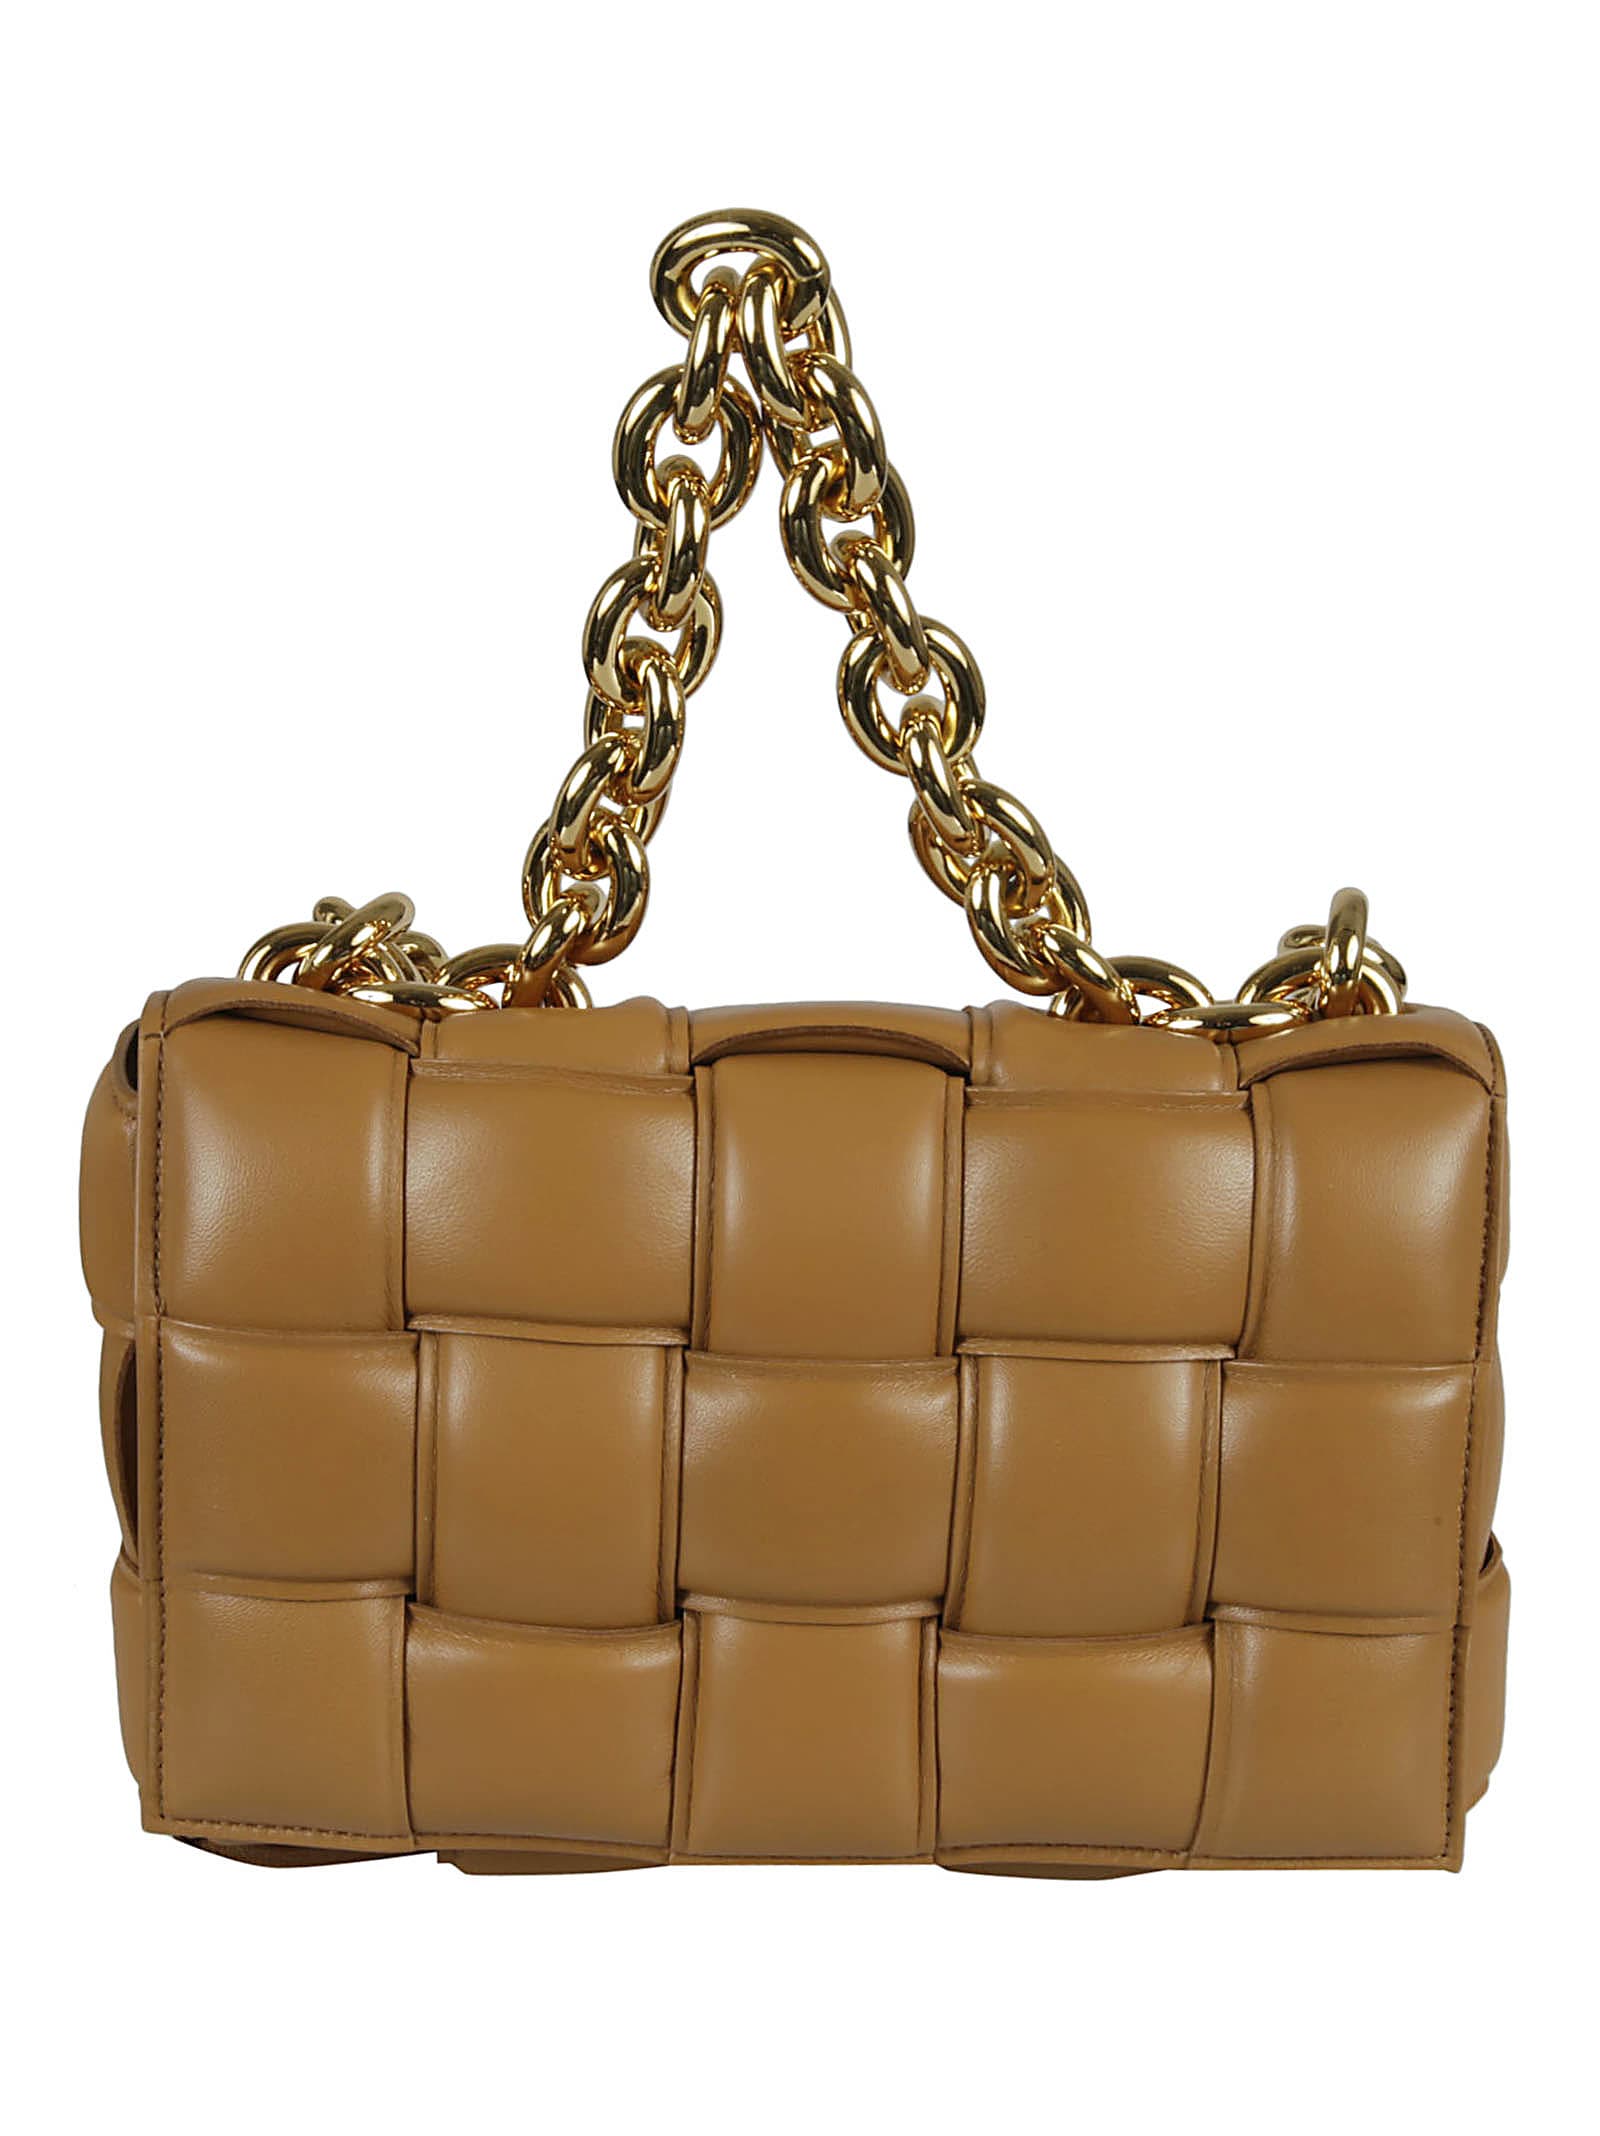 Bottega Veneta Intreccio Casette Chain Shoulder Bag